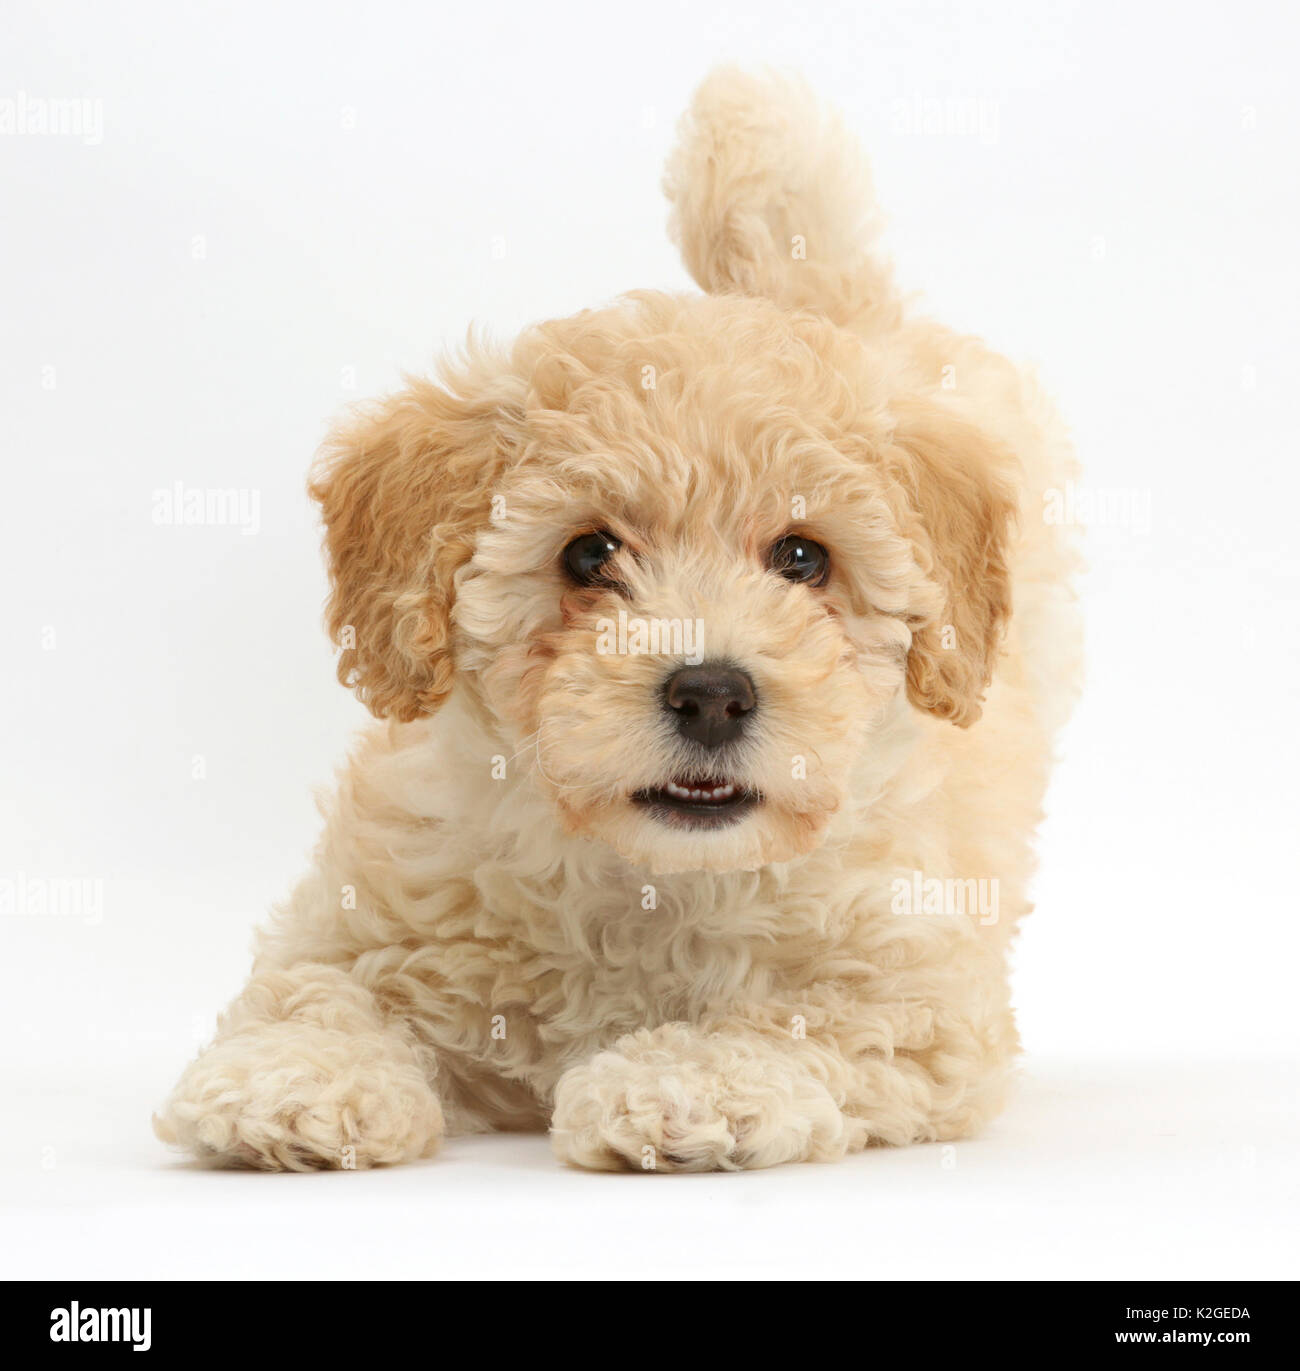 Poochon puppy, Bichon Frise cross Poodle, age 6 weeks Stock Photo - Alamy